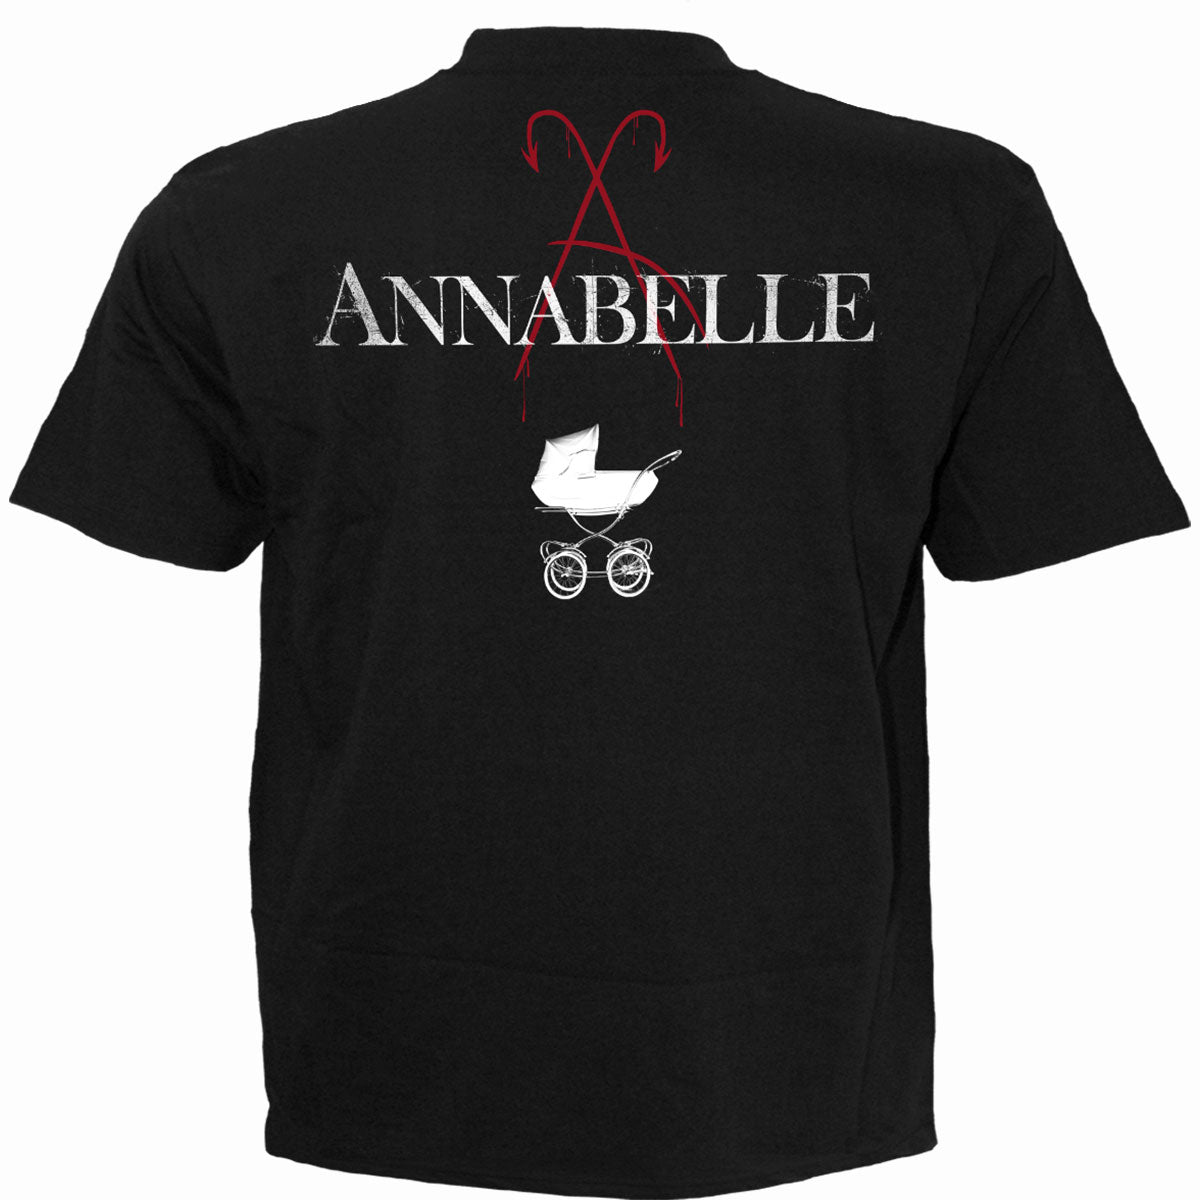 ANNABELLE - FOUND YOU - T-Shirt Black